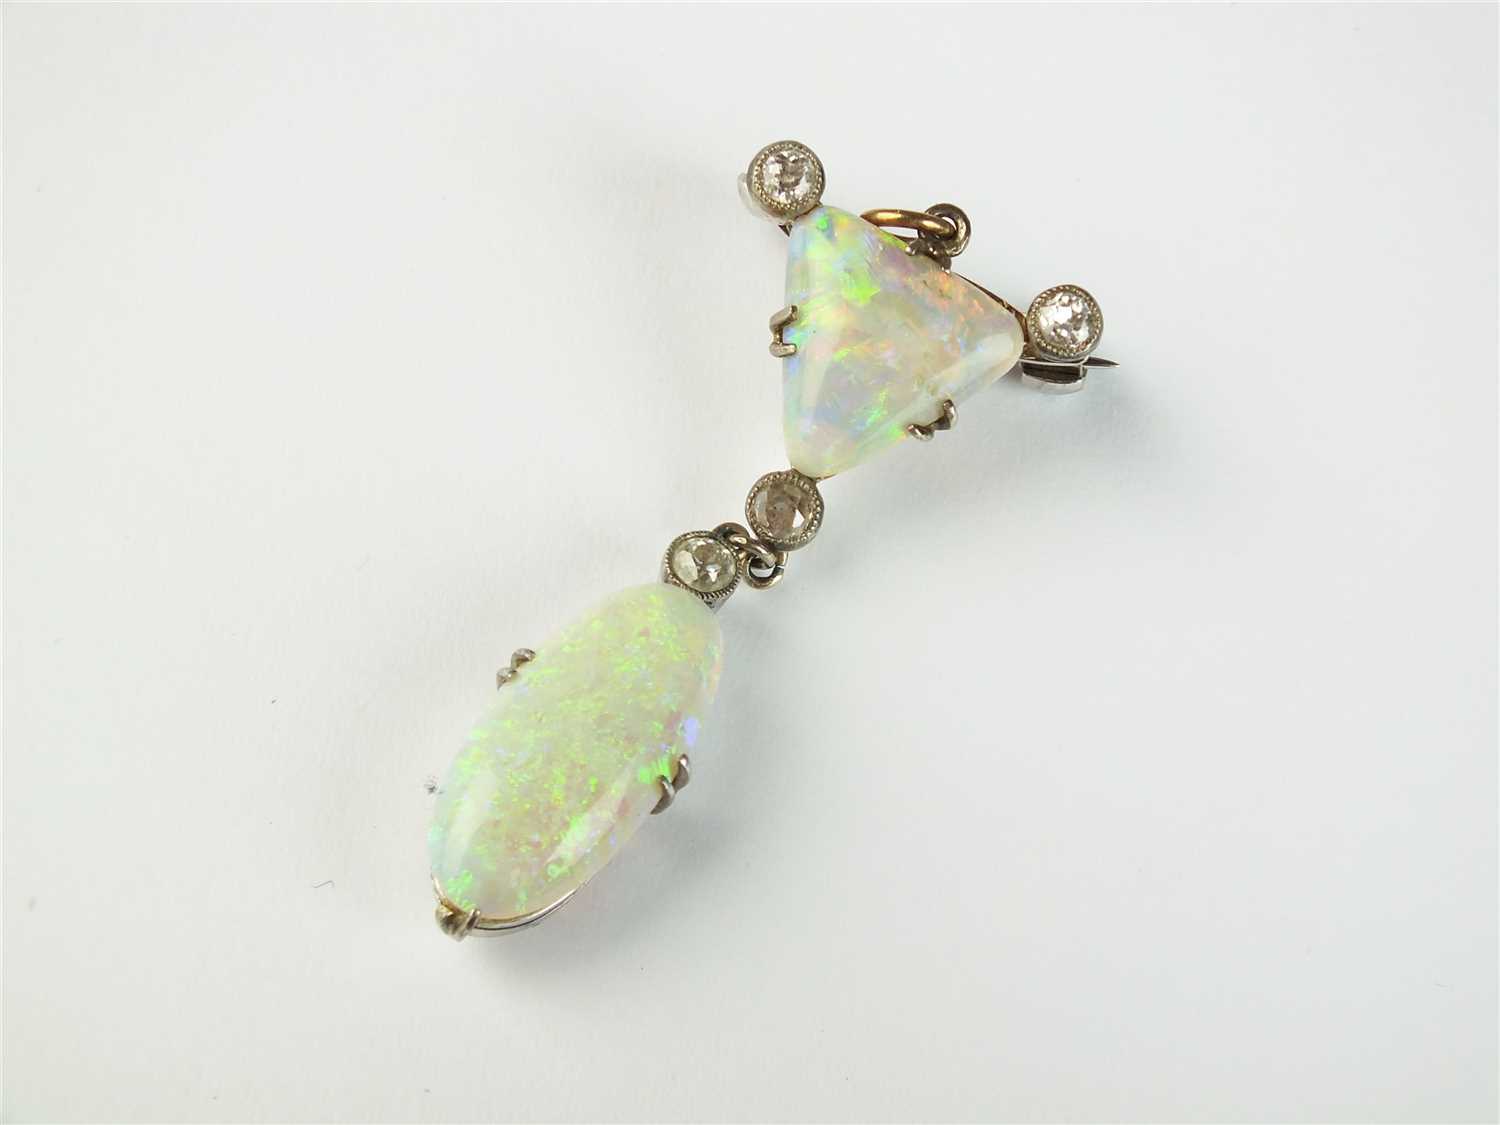 An opal and diamond pendant/brooch